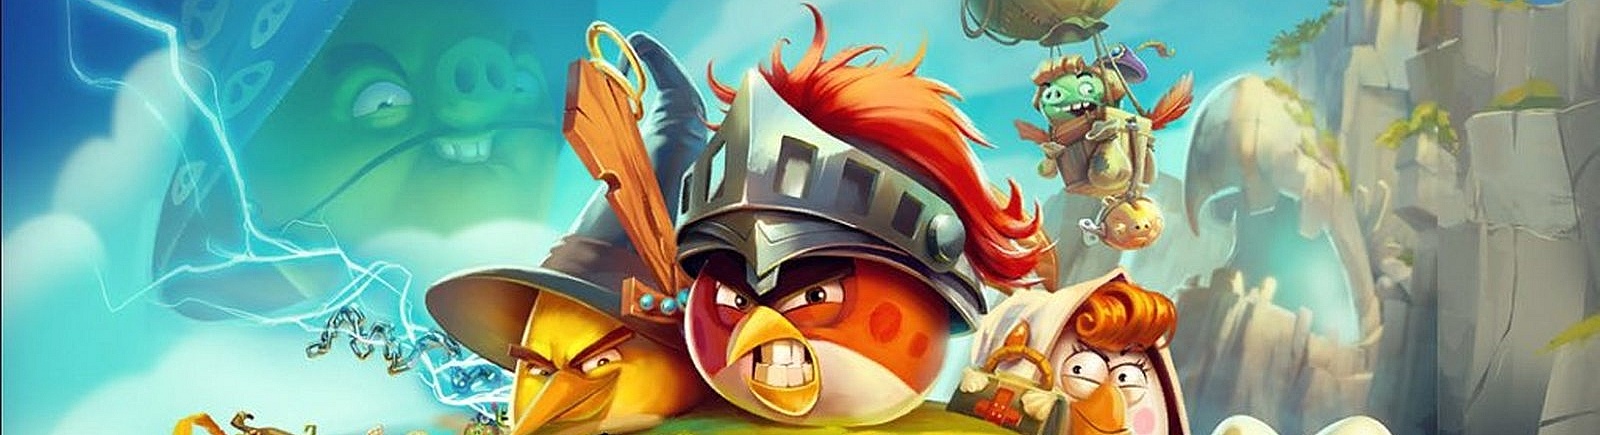 Новости Angry Birds Epic: Состоялся релиз Angry Birds Epic